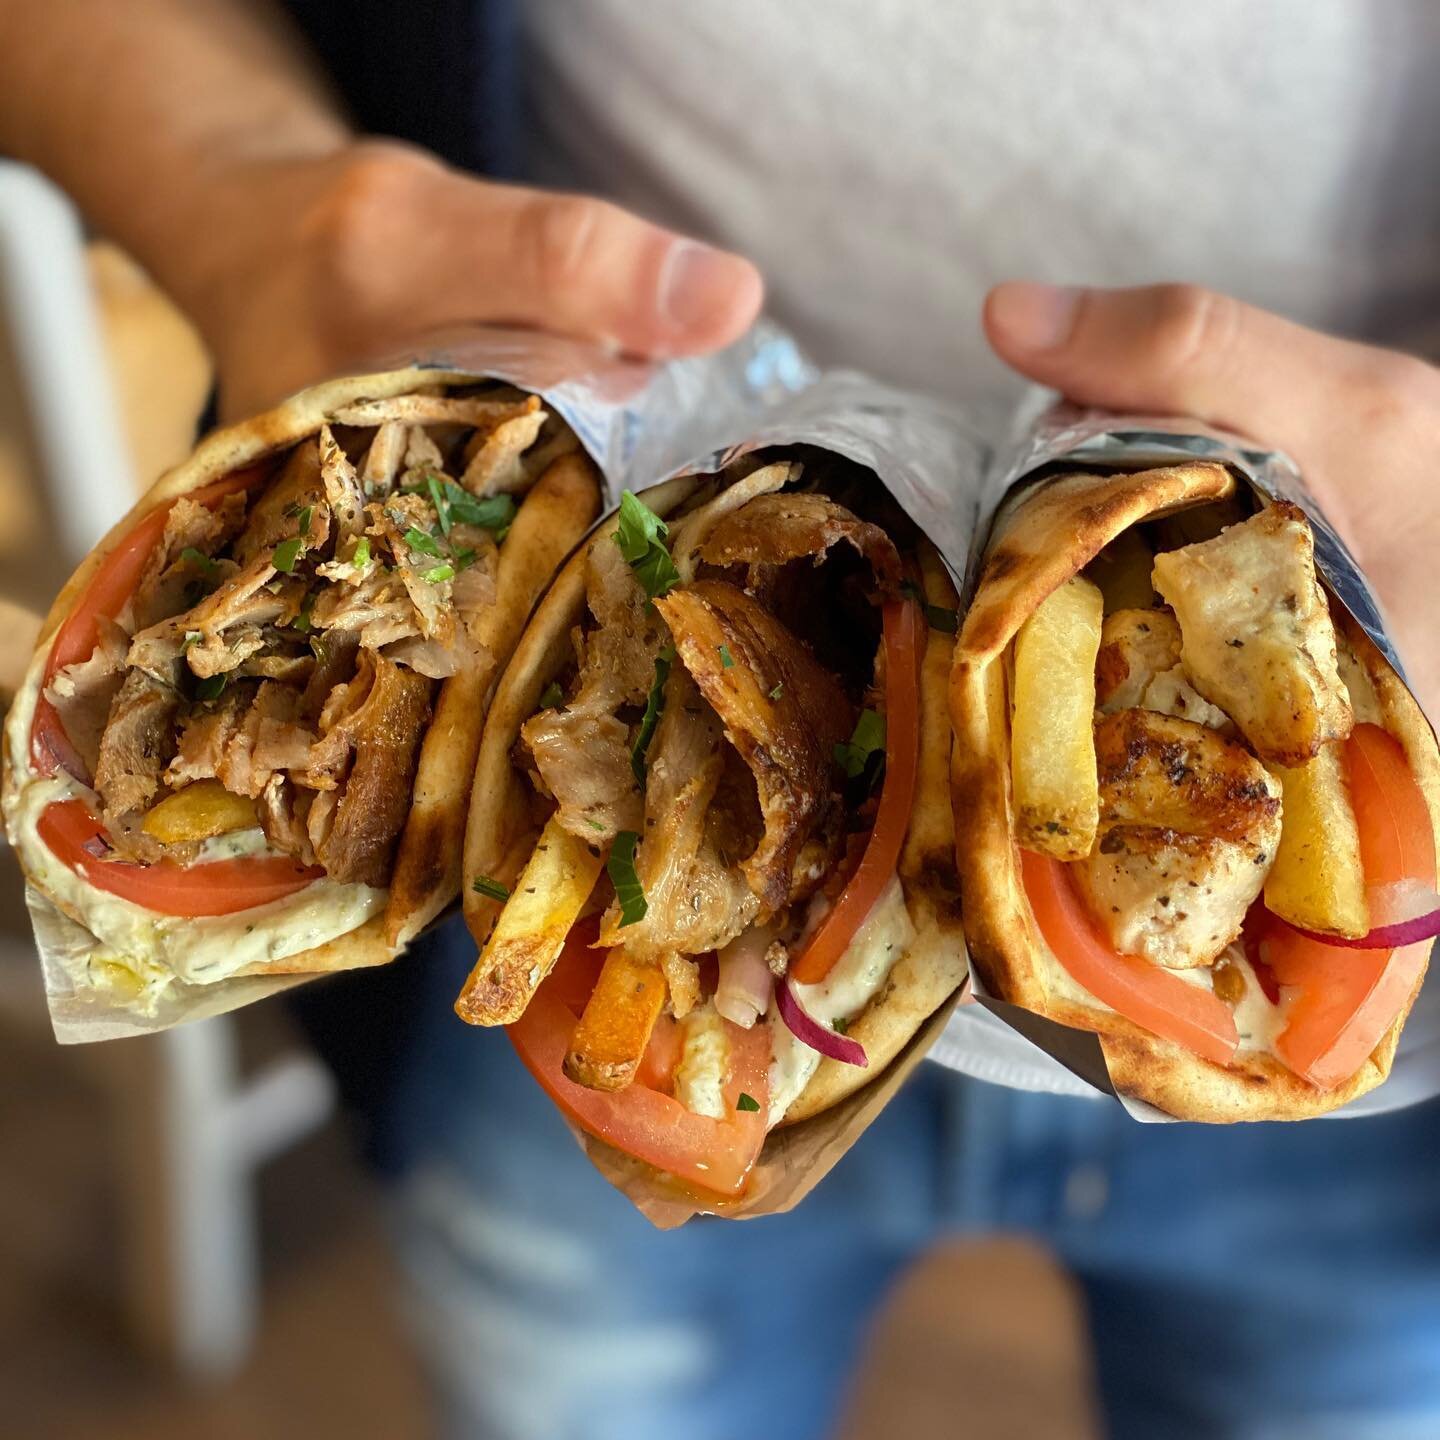 There&rsquo;s no better cure for a Cinco de Drinko hangover than Gyro! #gyro #mykonos #mykonosmondays #santorini #mykonosmonday #santorinisundays #stamykonos #stamvegas #stamfordct #food #greek #greekfood #greekrestaurant #greekcuisine #greekkitchen 